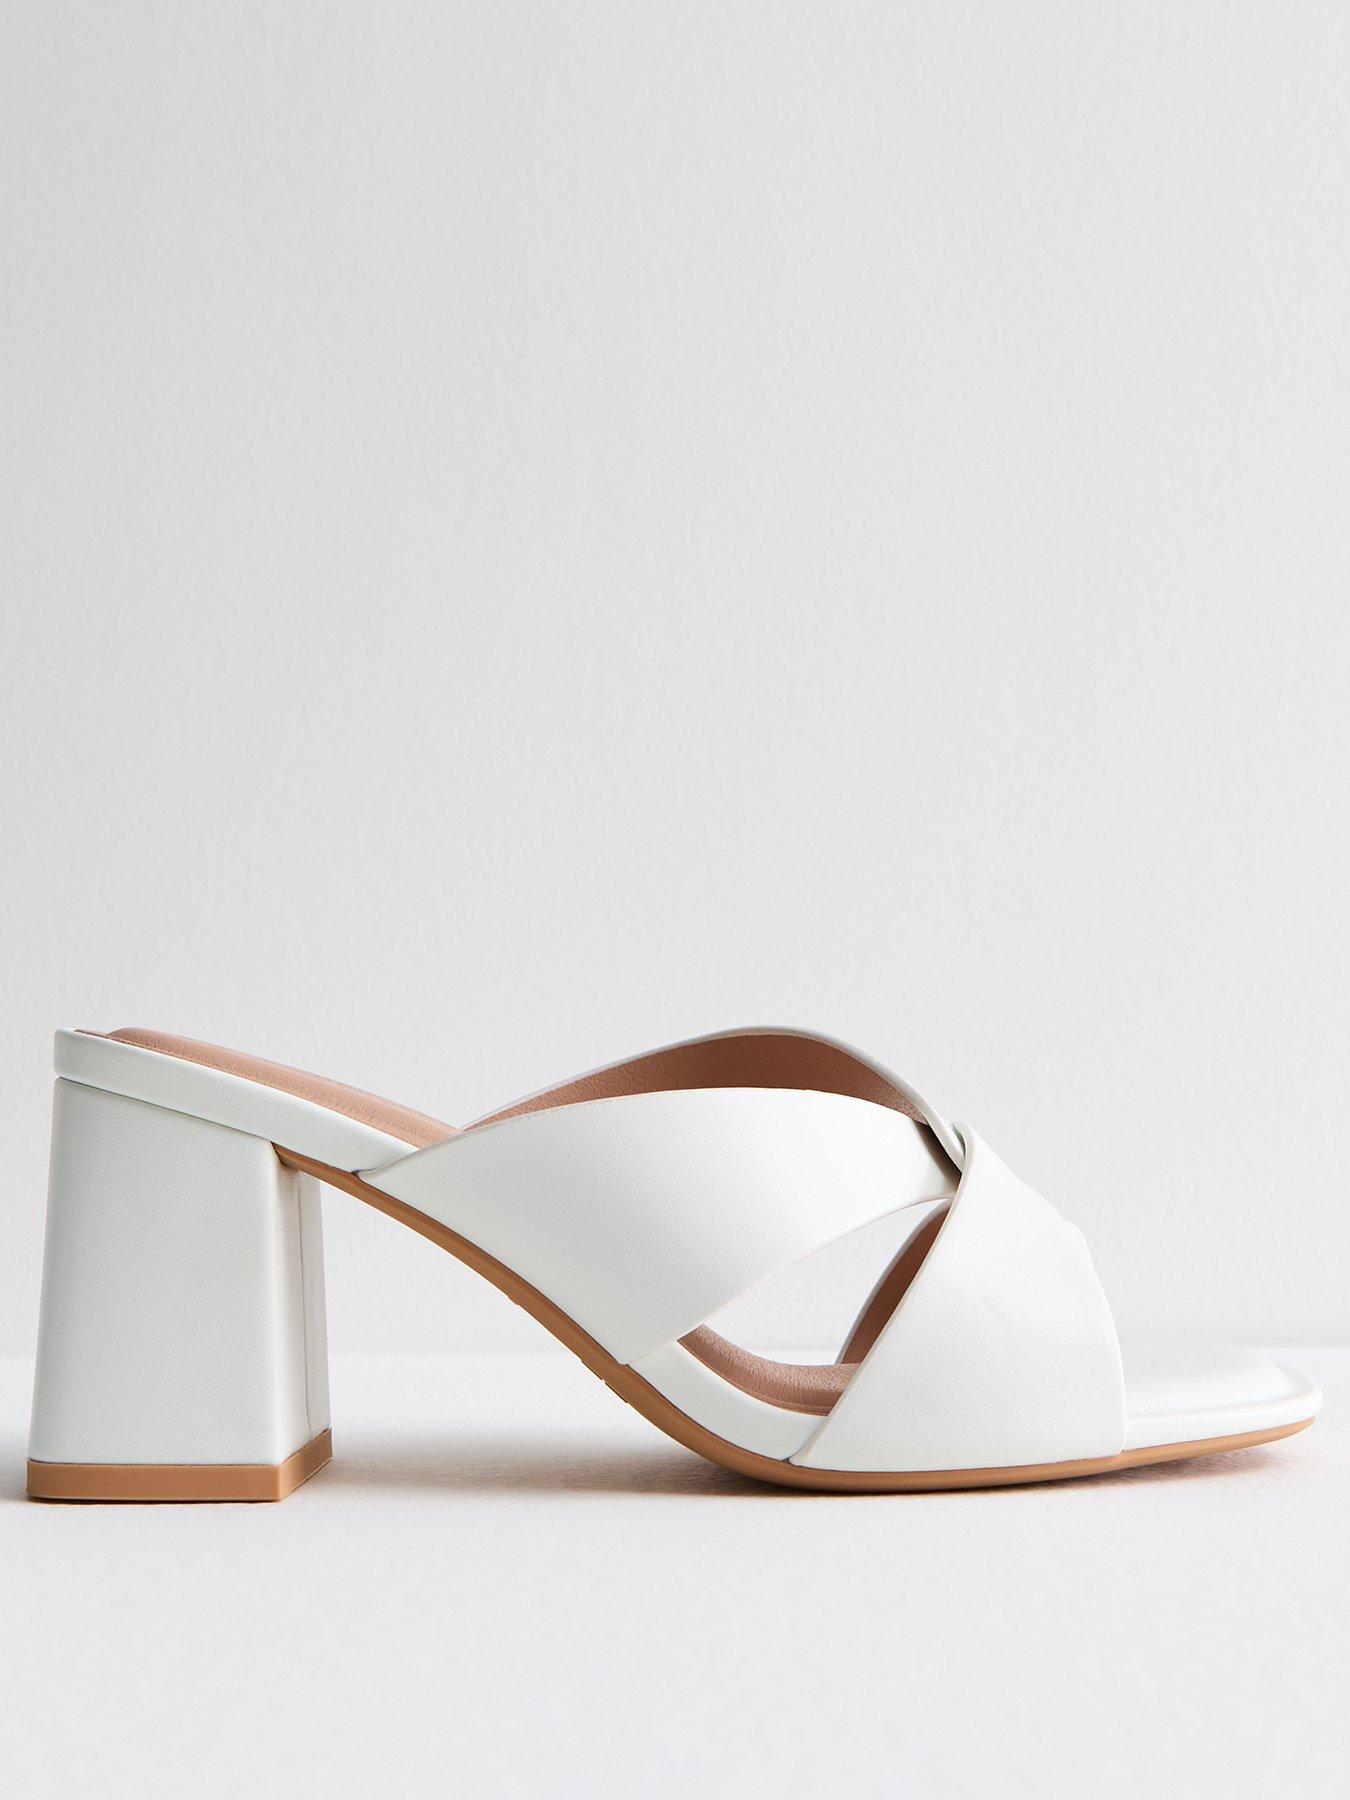 New Look Wide Fit - Sandali in ecopelle effetto coccodrillo rosa chiaro con  tacco largo | ASOS | Sandals heels, Block heels sandal, Heels